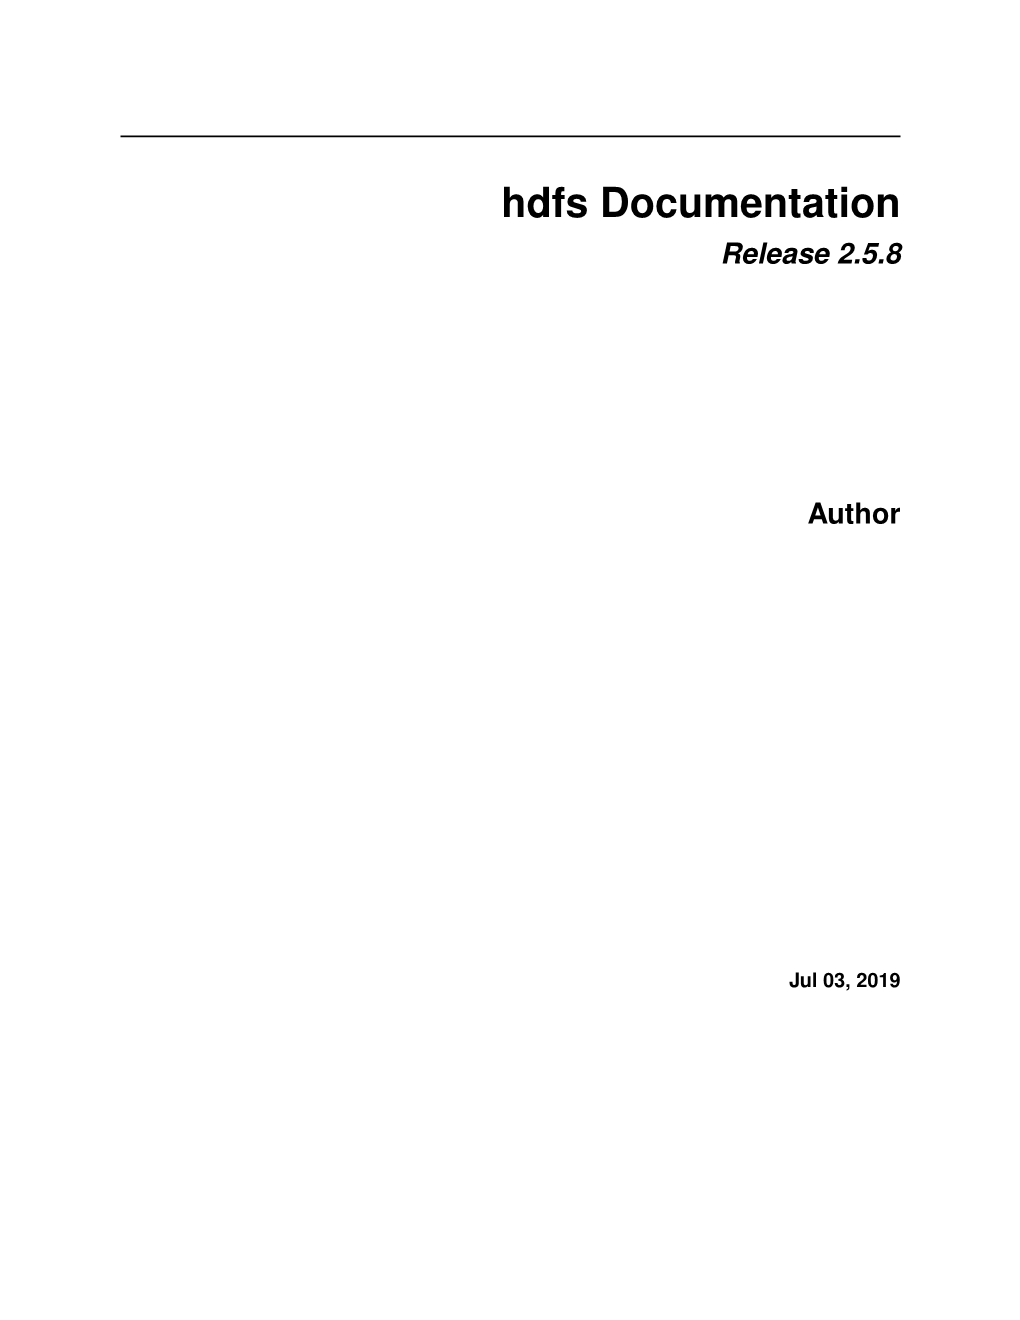 Hdfs Documentation Release 2.5.8